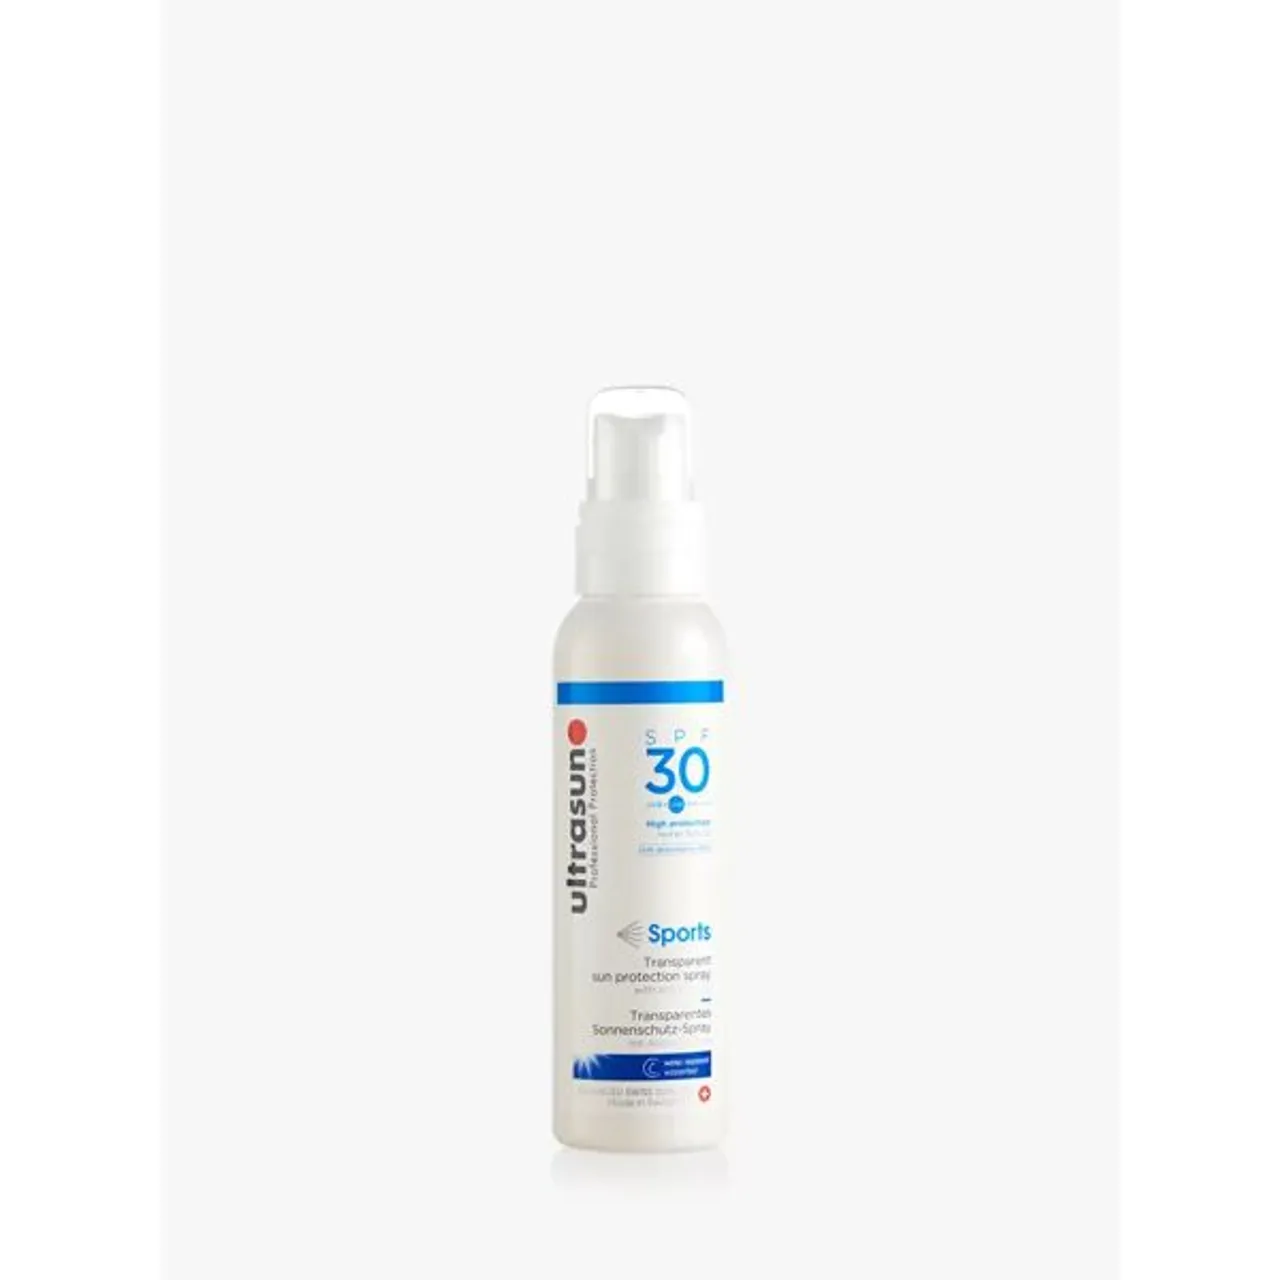 Ultrasun Sports Spray SPF 30, 150ml - Unisex - Size: 150ml